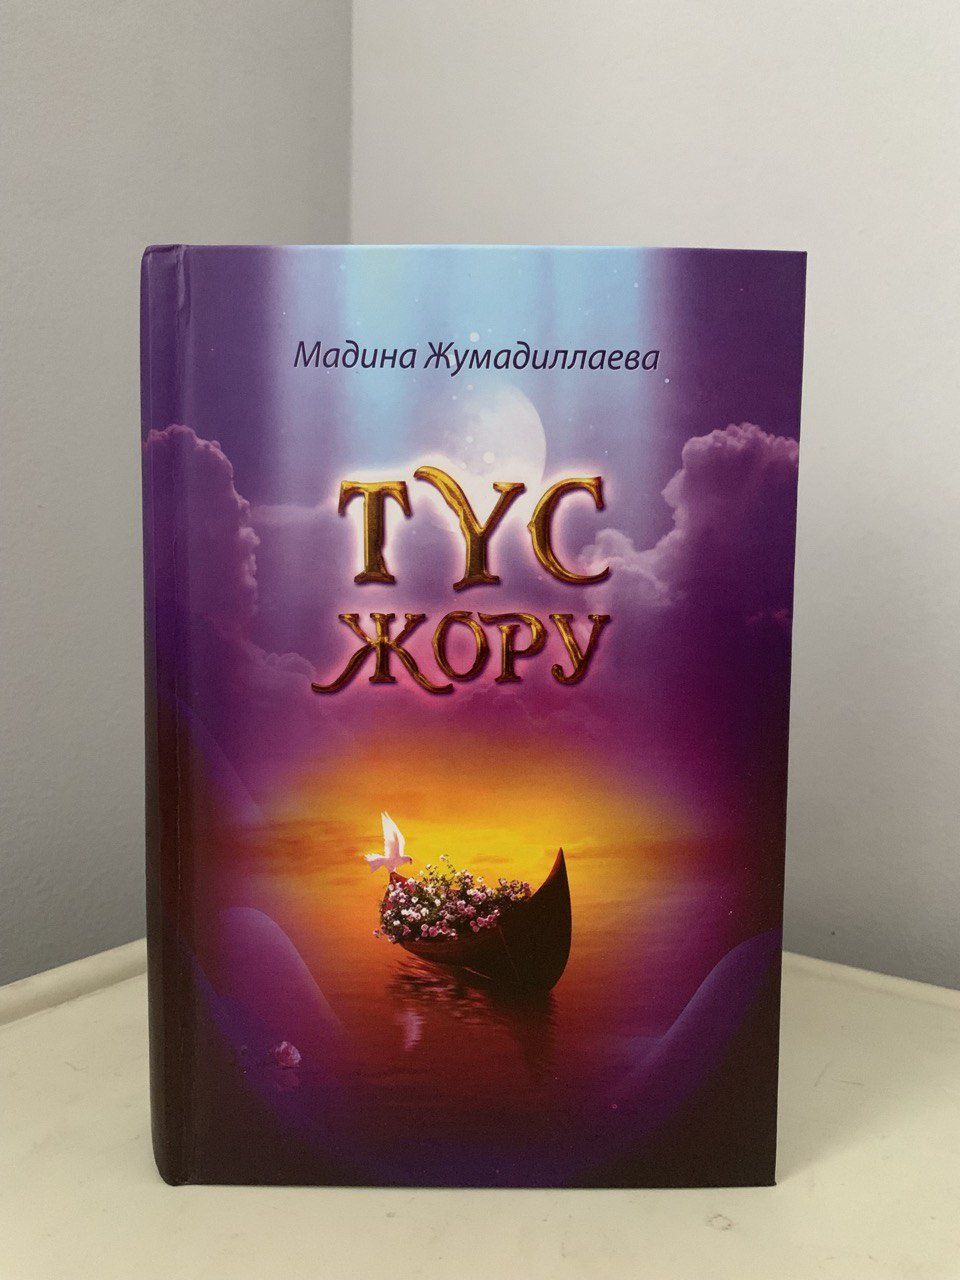 Книга " Түс жору" на казахском языке